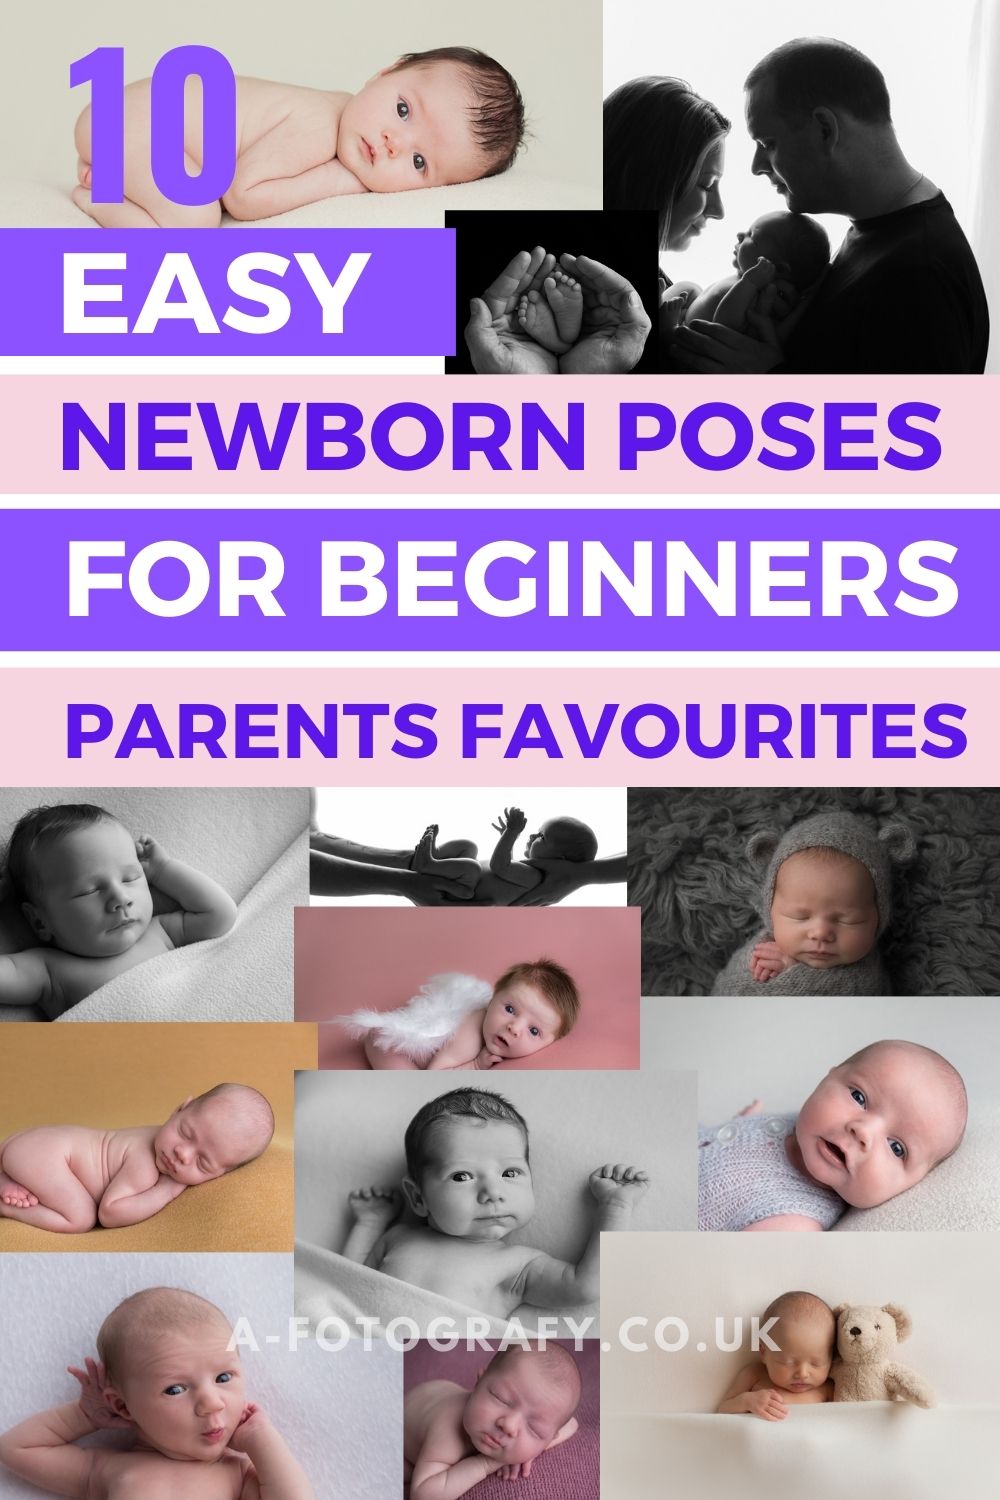 Newborn Family Photoshoot with Susan Porter-Thomas Photography